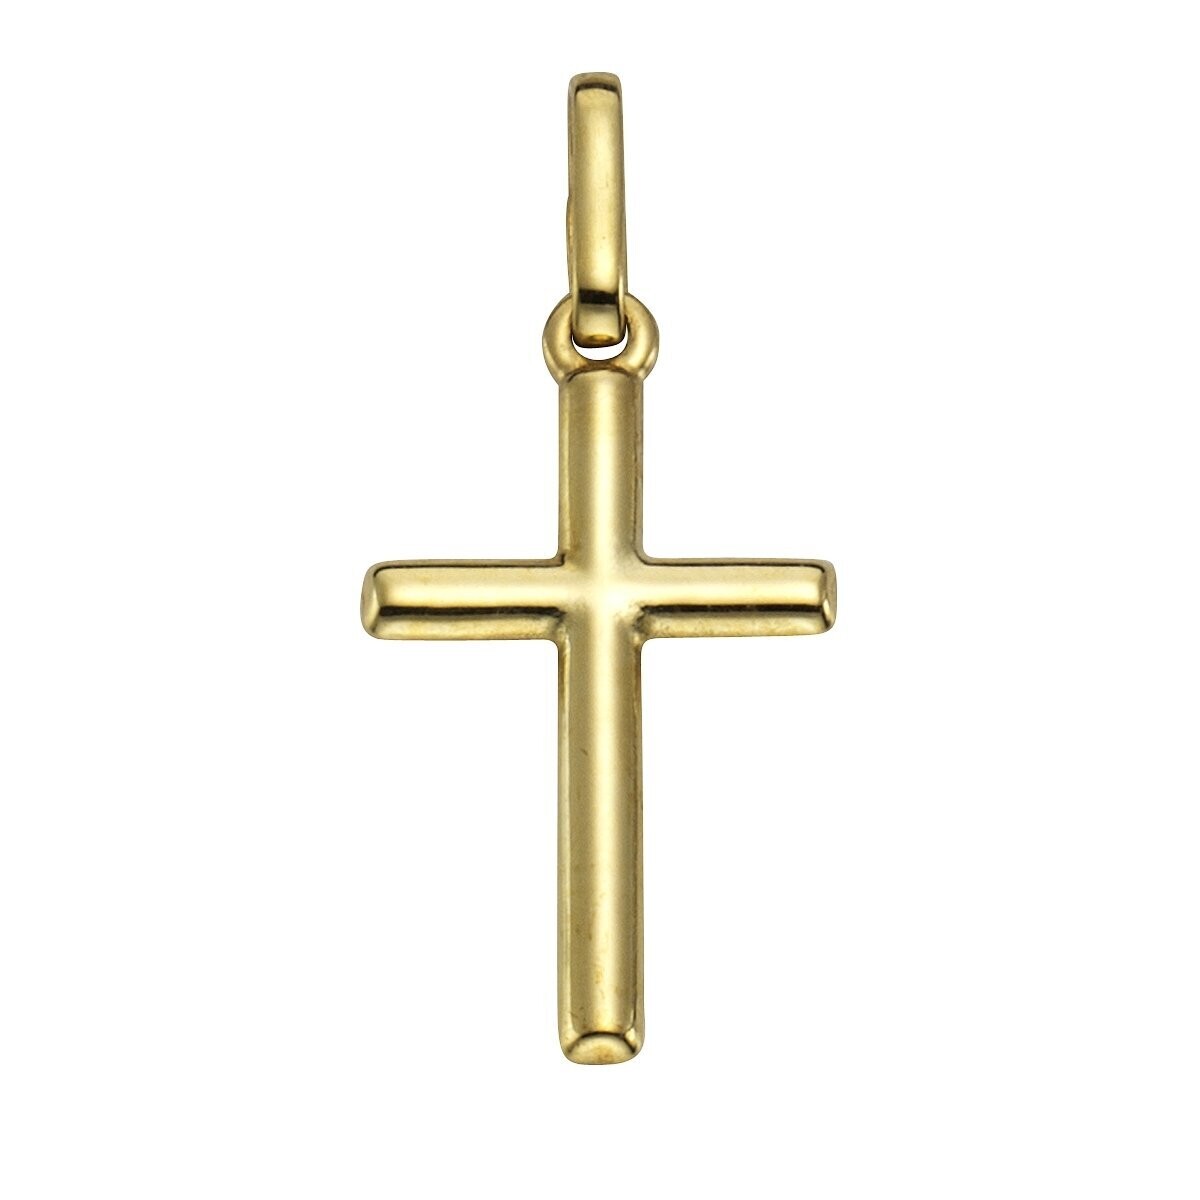 2,6 cm Kreuzanhänger aus Gold